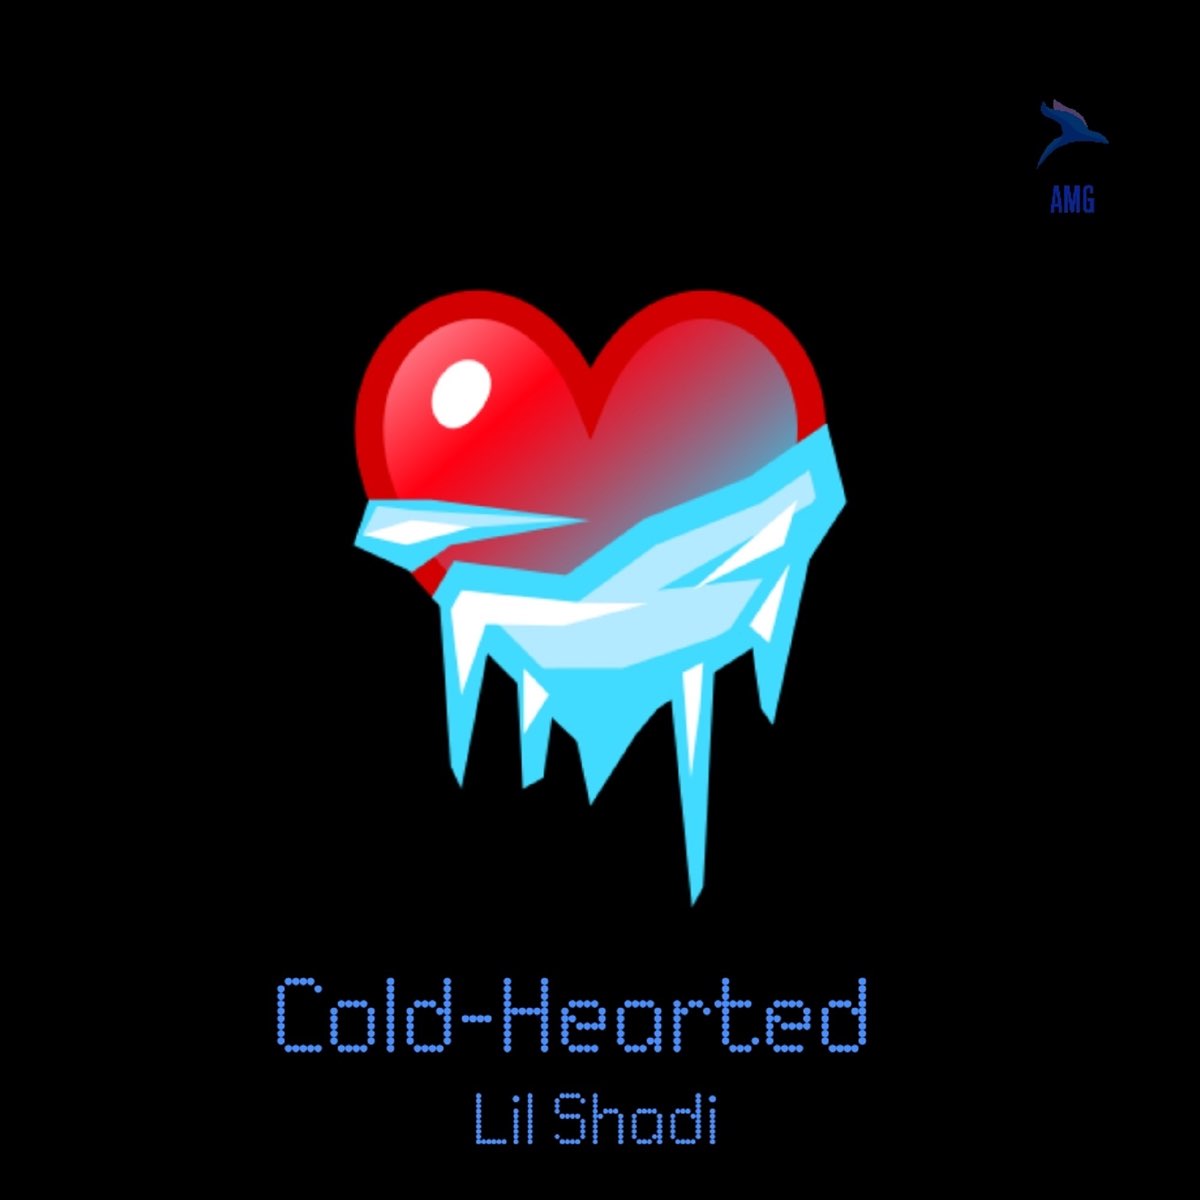 Cold hear. Cold hearted. Cold Heart. В сердце холода. HXZZ - Cold hearted.